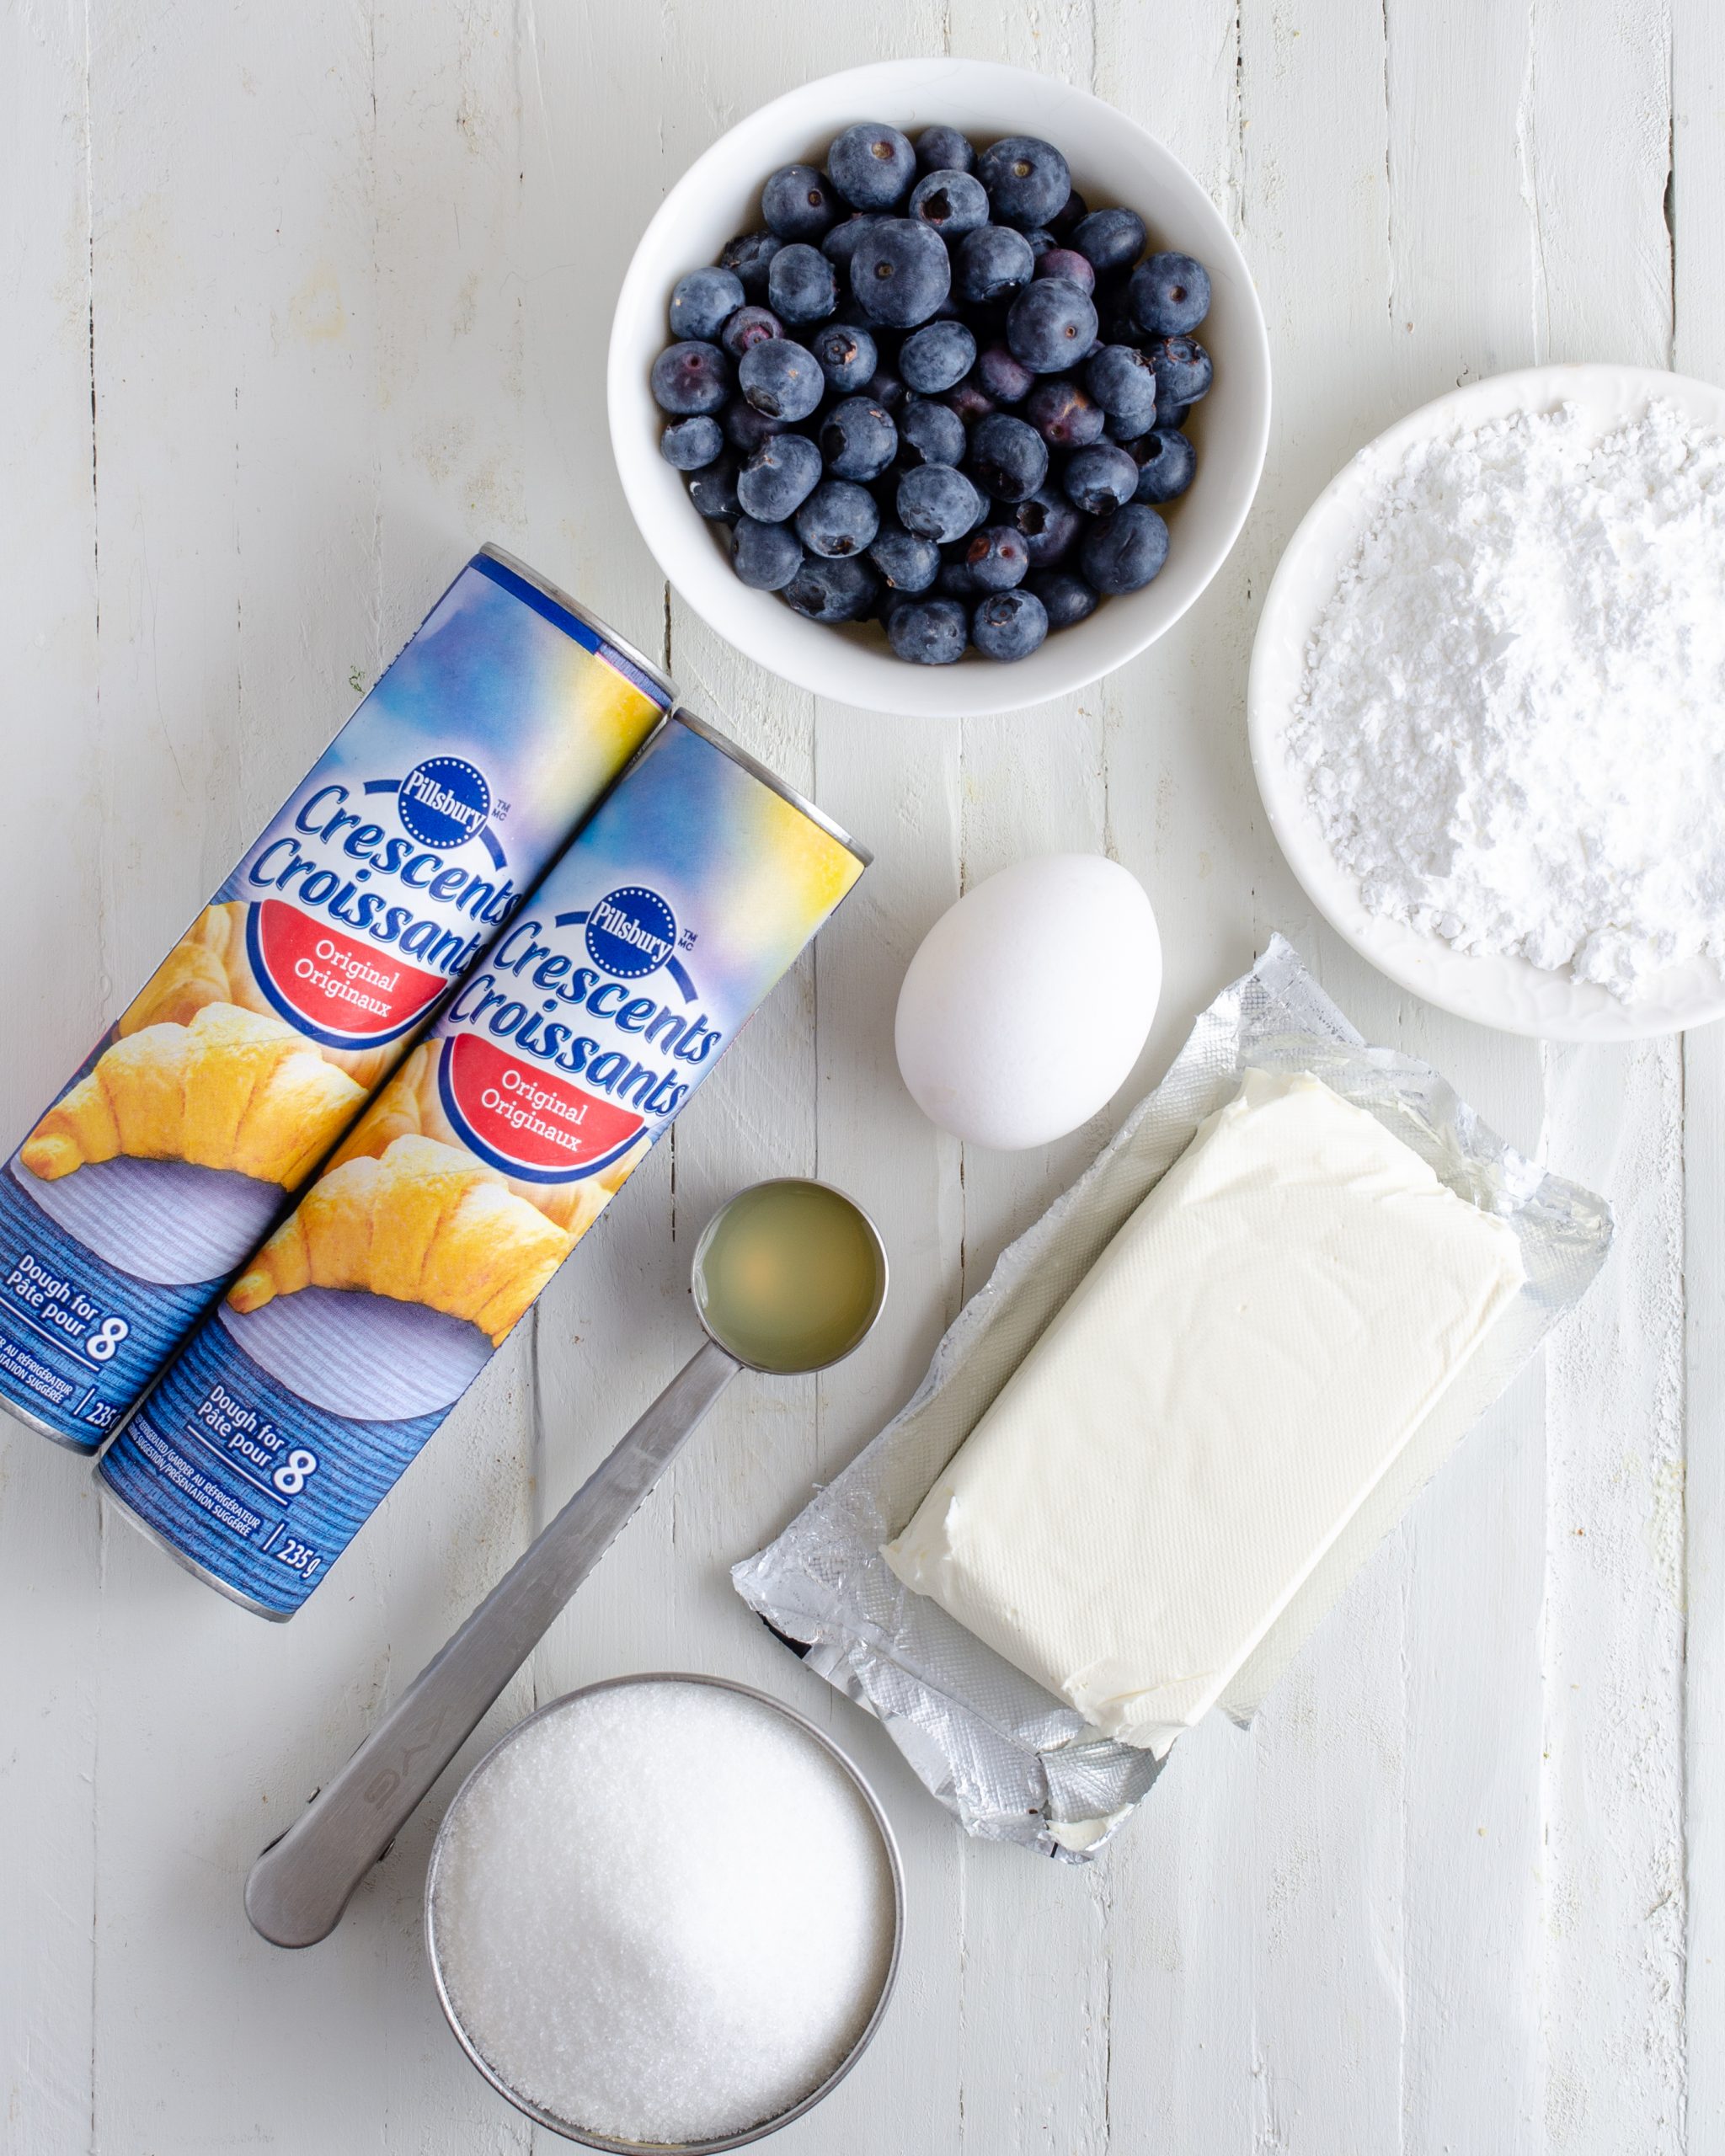 blueberry cream cheese crescent rolls ingredients